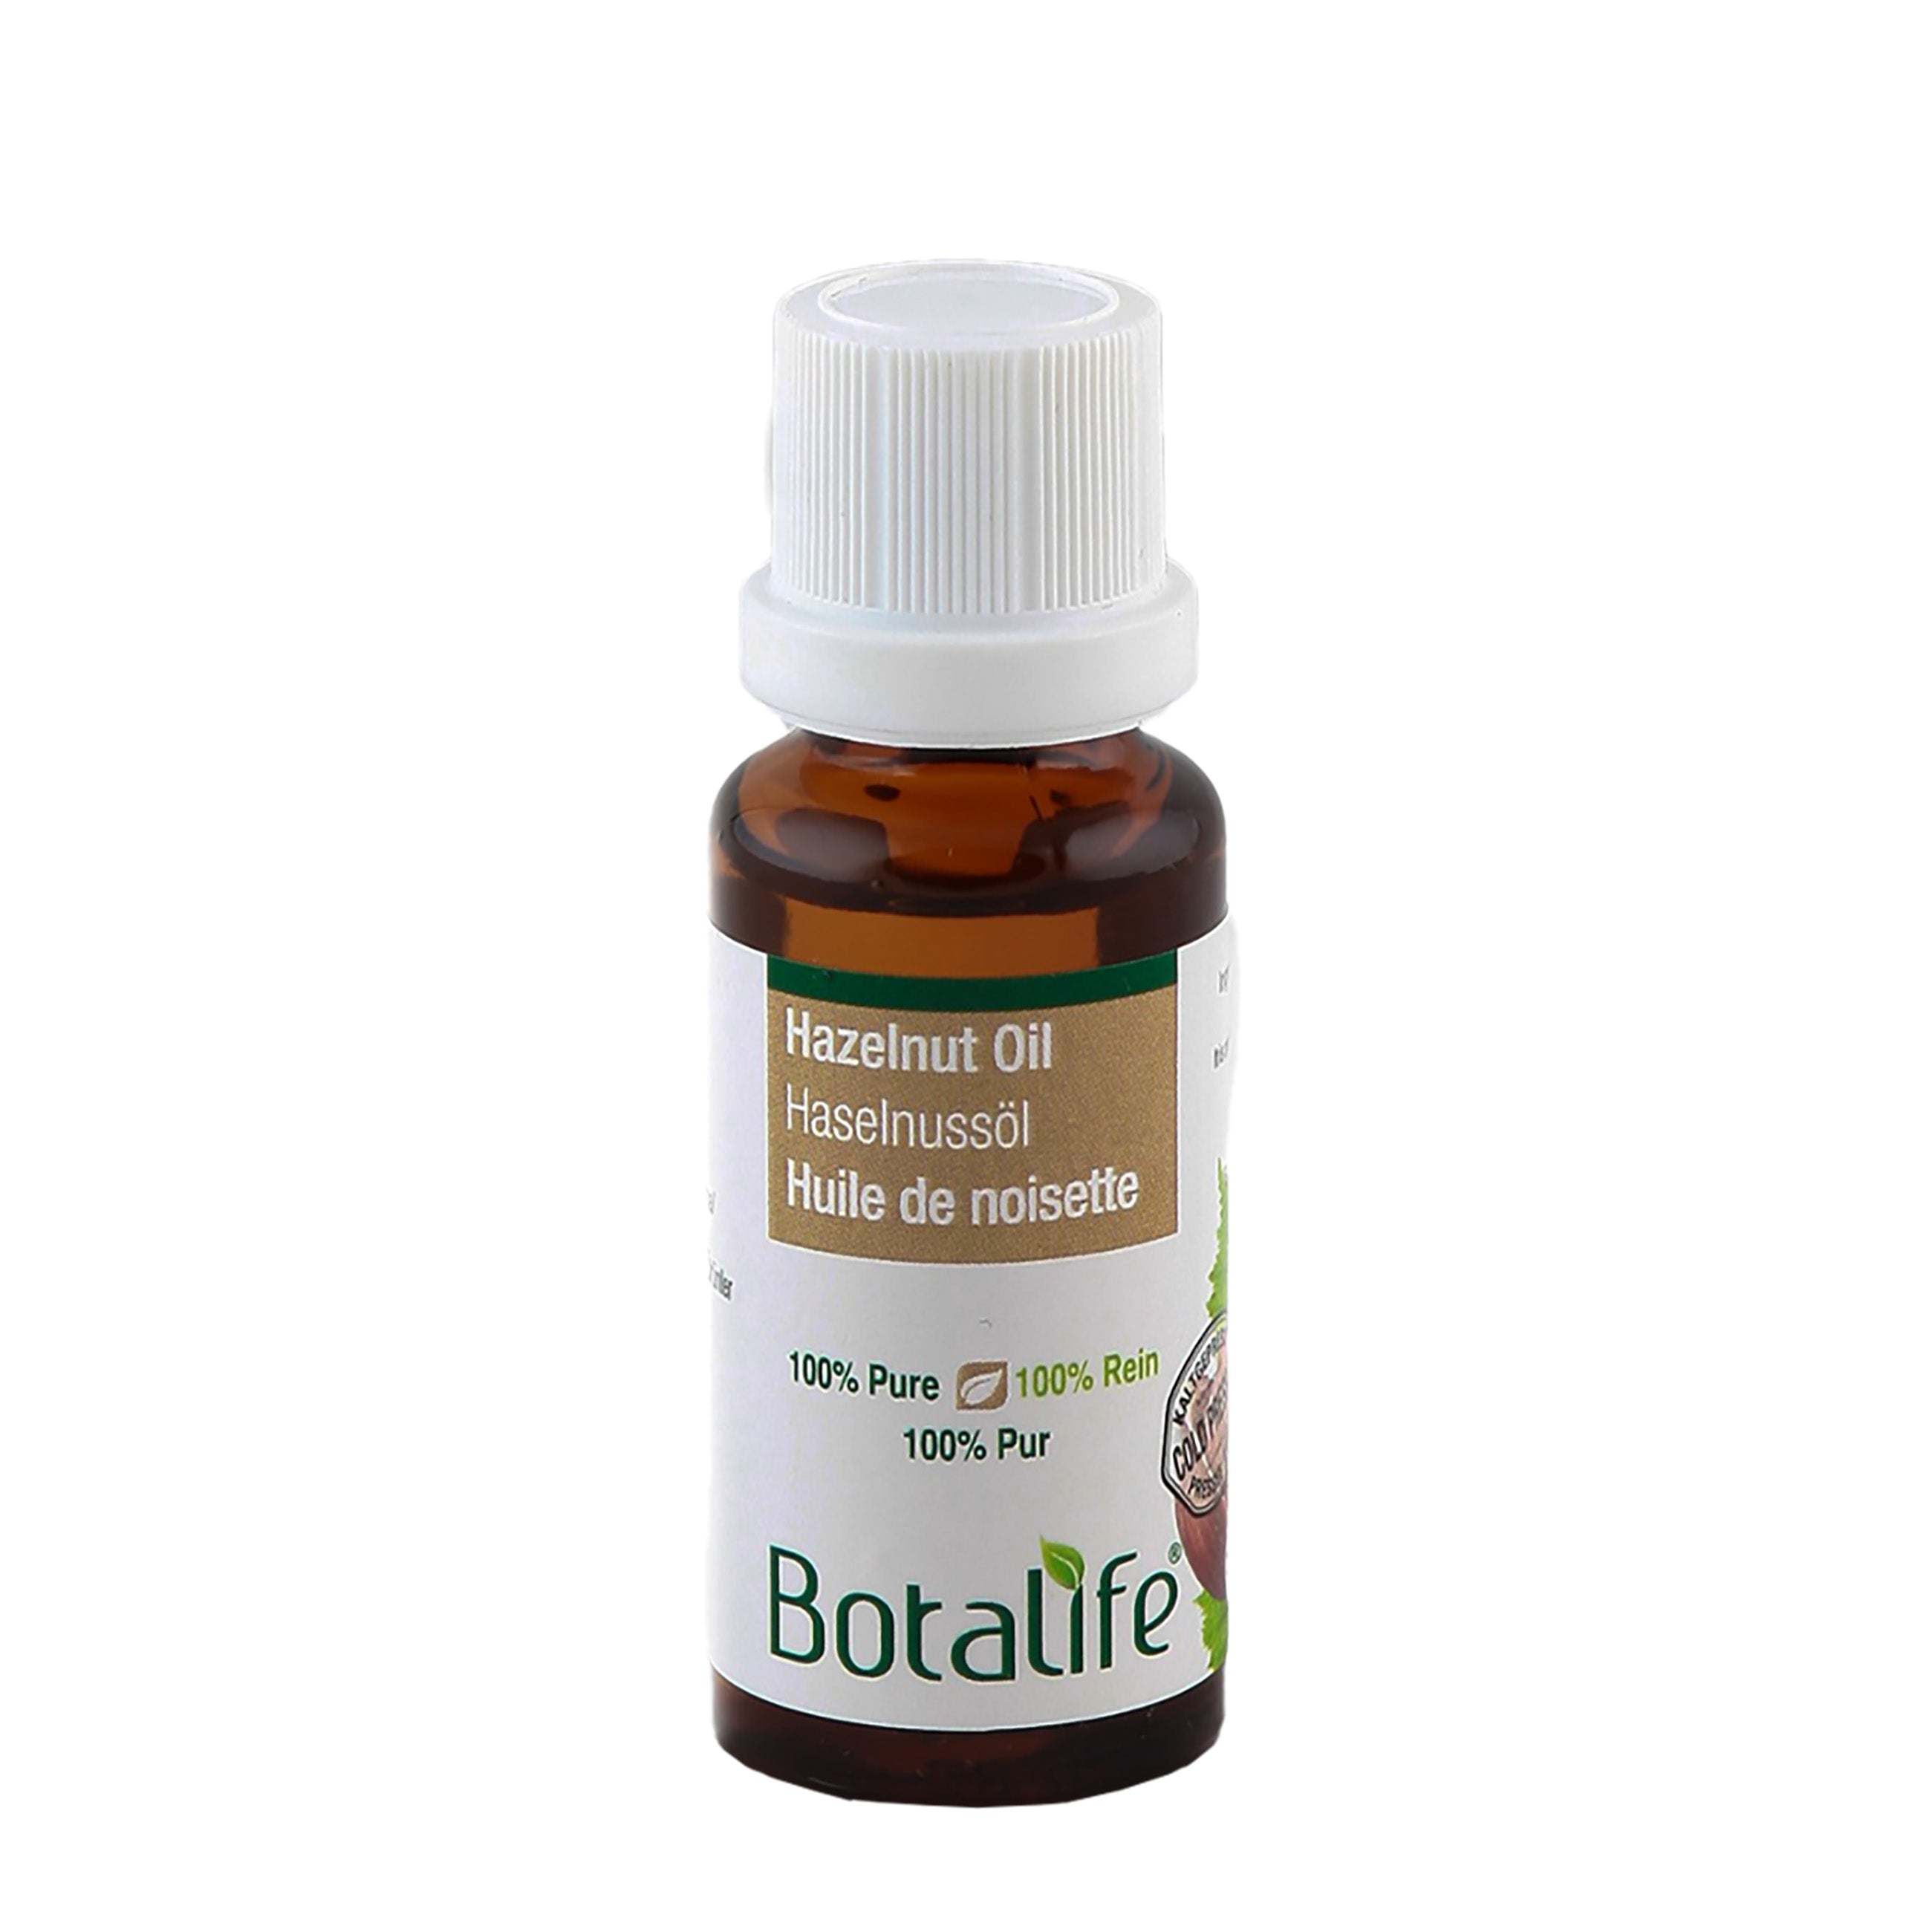 Botalife Hazelnut oil